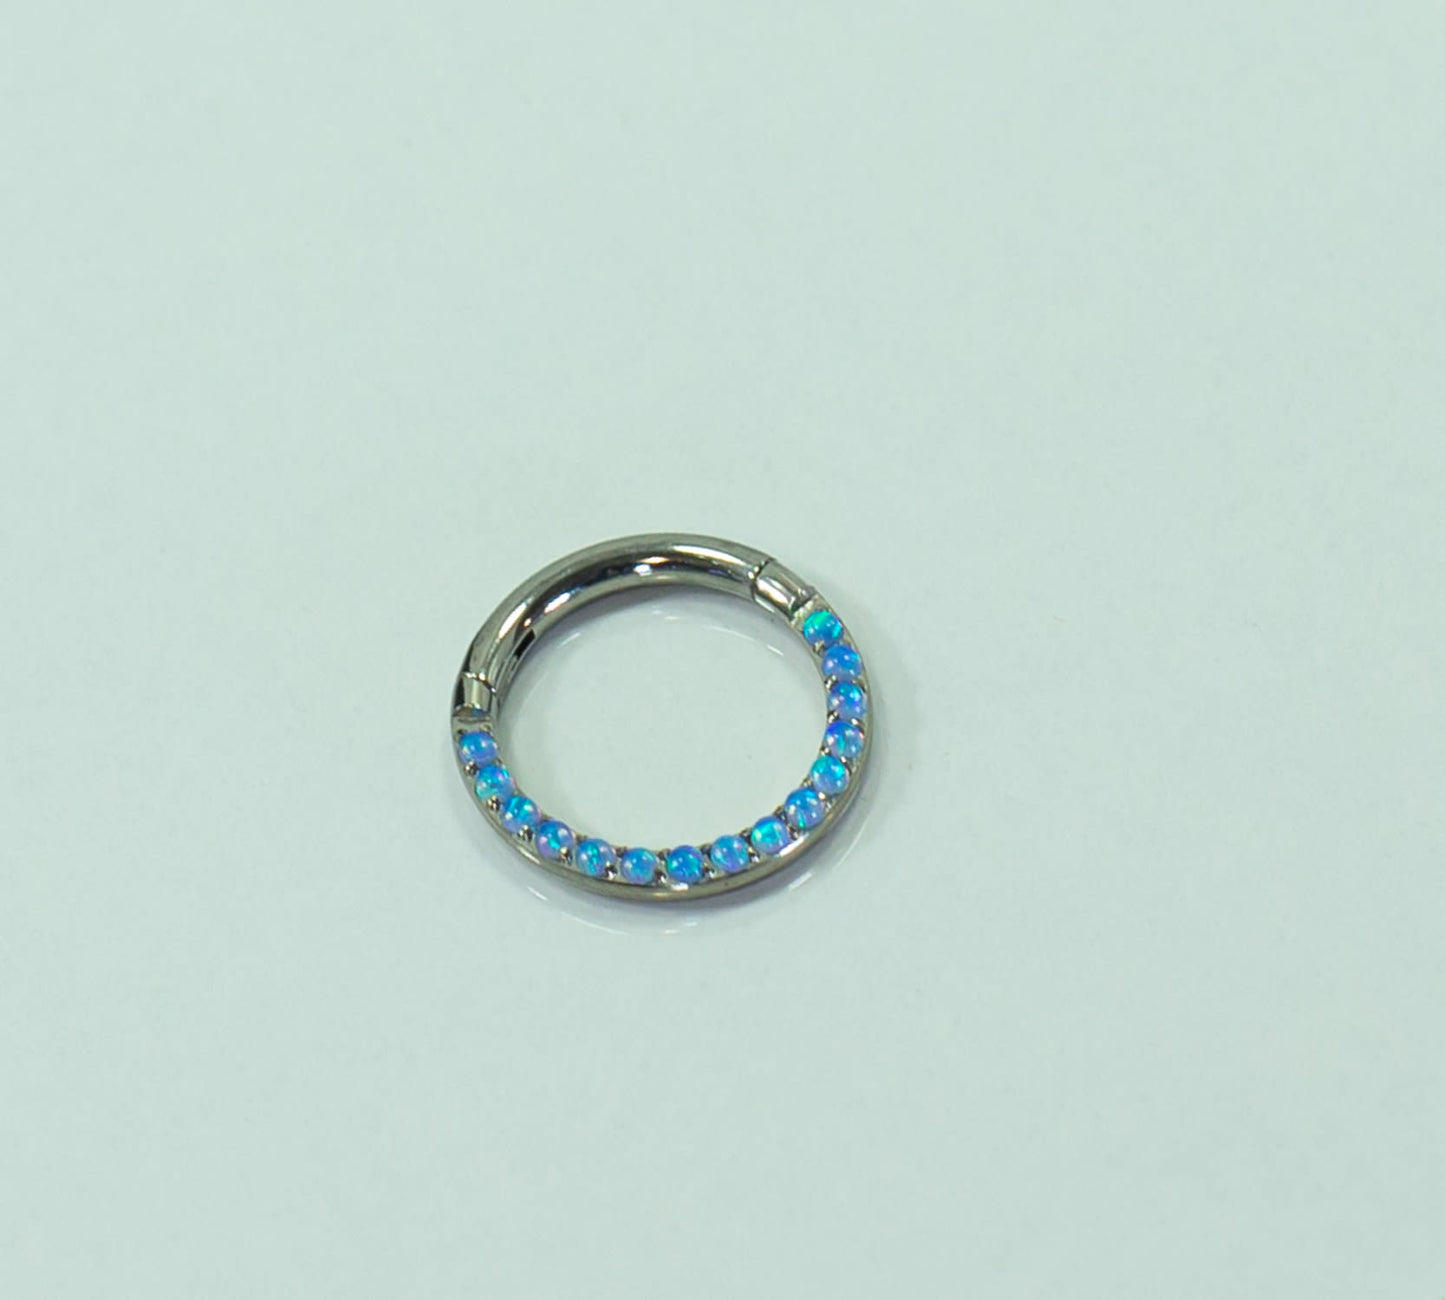 Argolla titanio ASTM F136 - Segment ring con línea de ópalos frontal azul